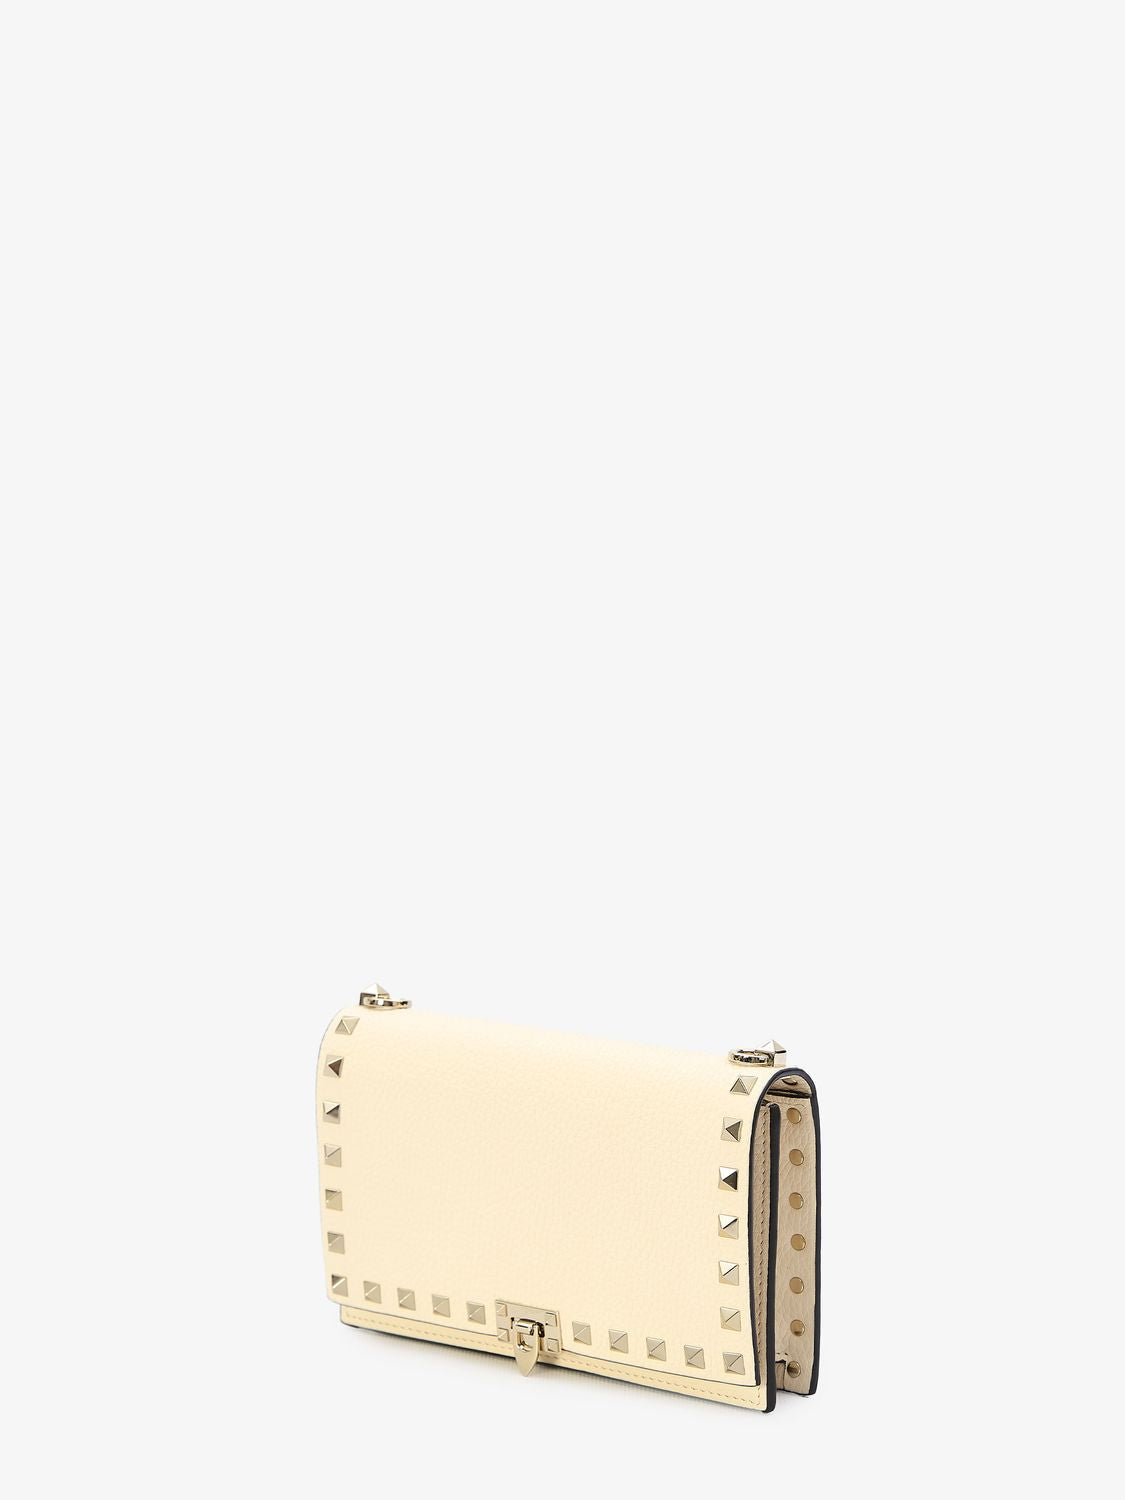 VALENTINO GARAVANI Chic Small Rockstud Cream Grained Leather Handbag with Platinum Studs and Chain Strap 19x4.5x12 cm